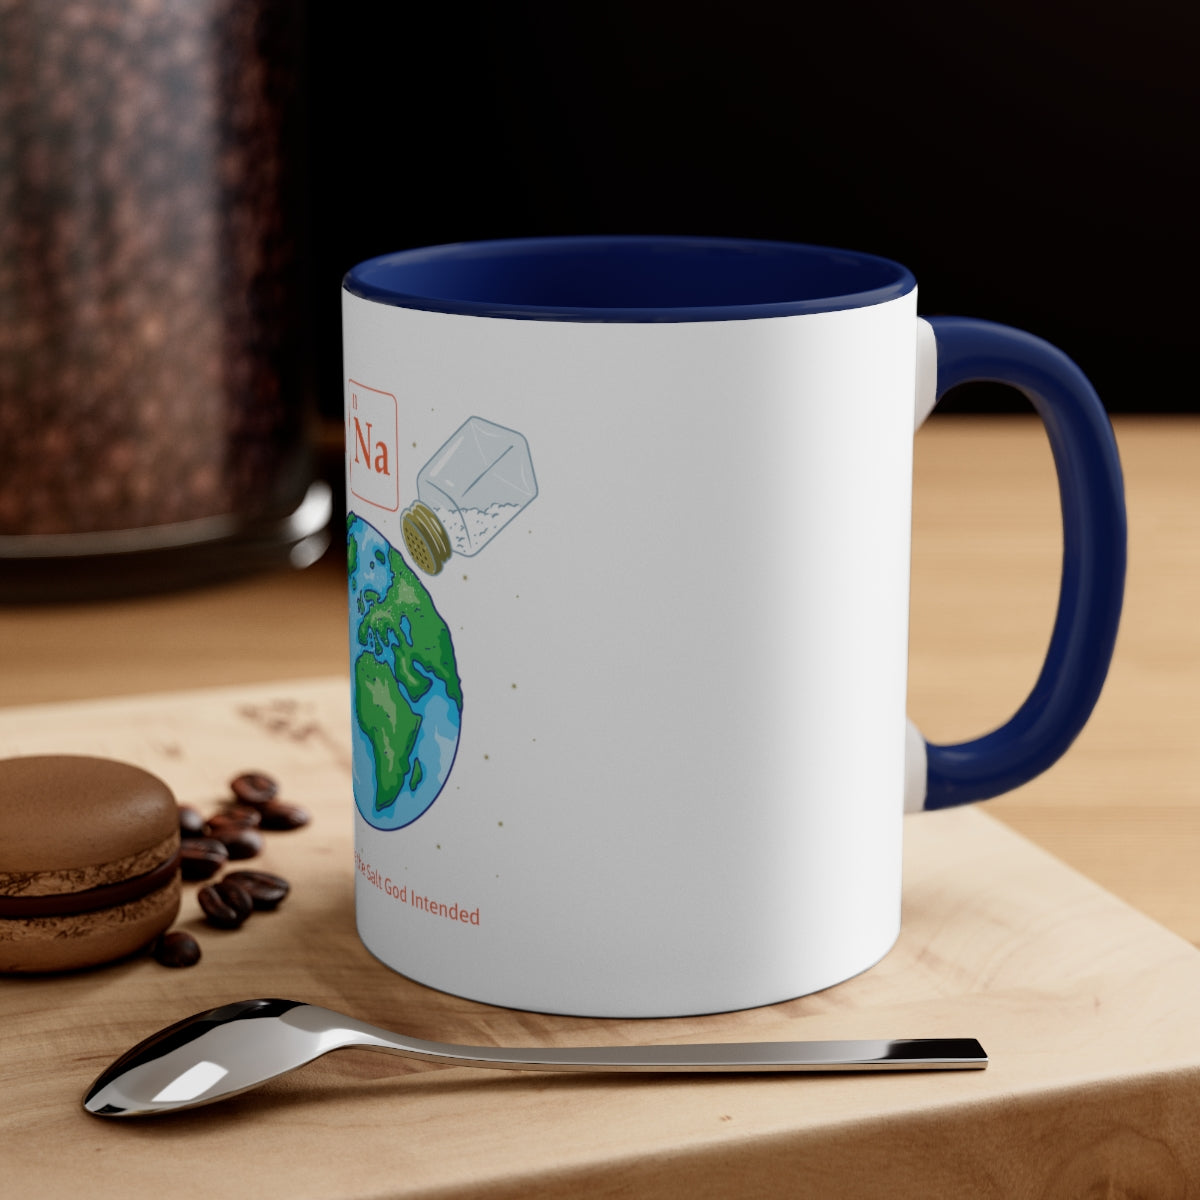 Man Na - Accent Coffee Mug, 11oz